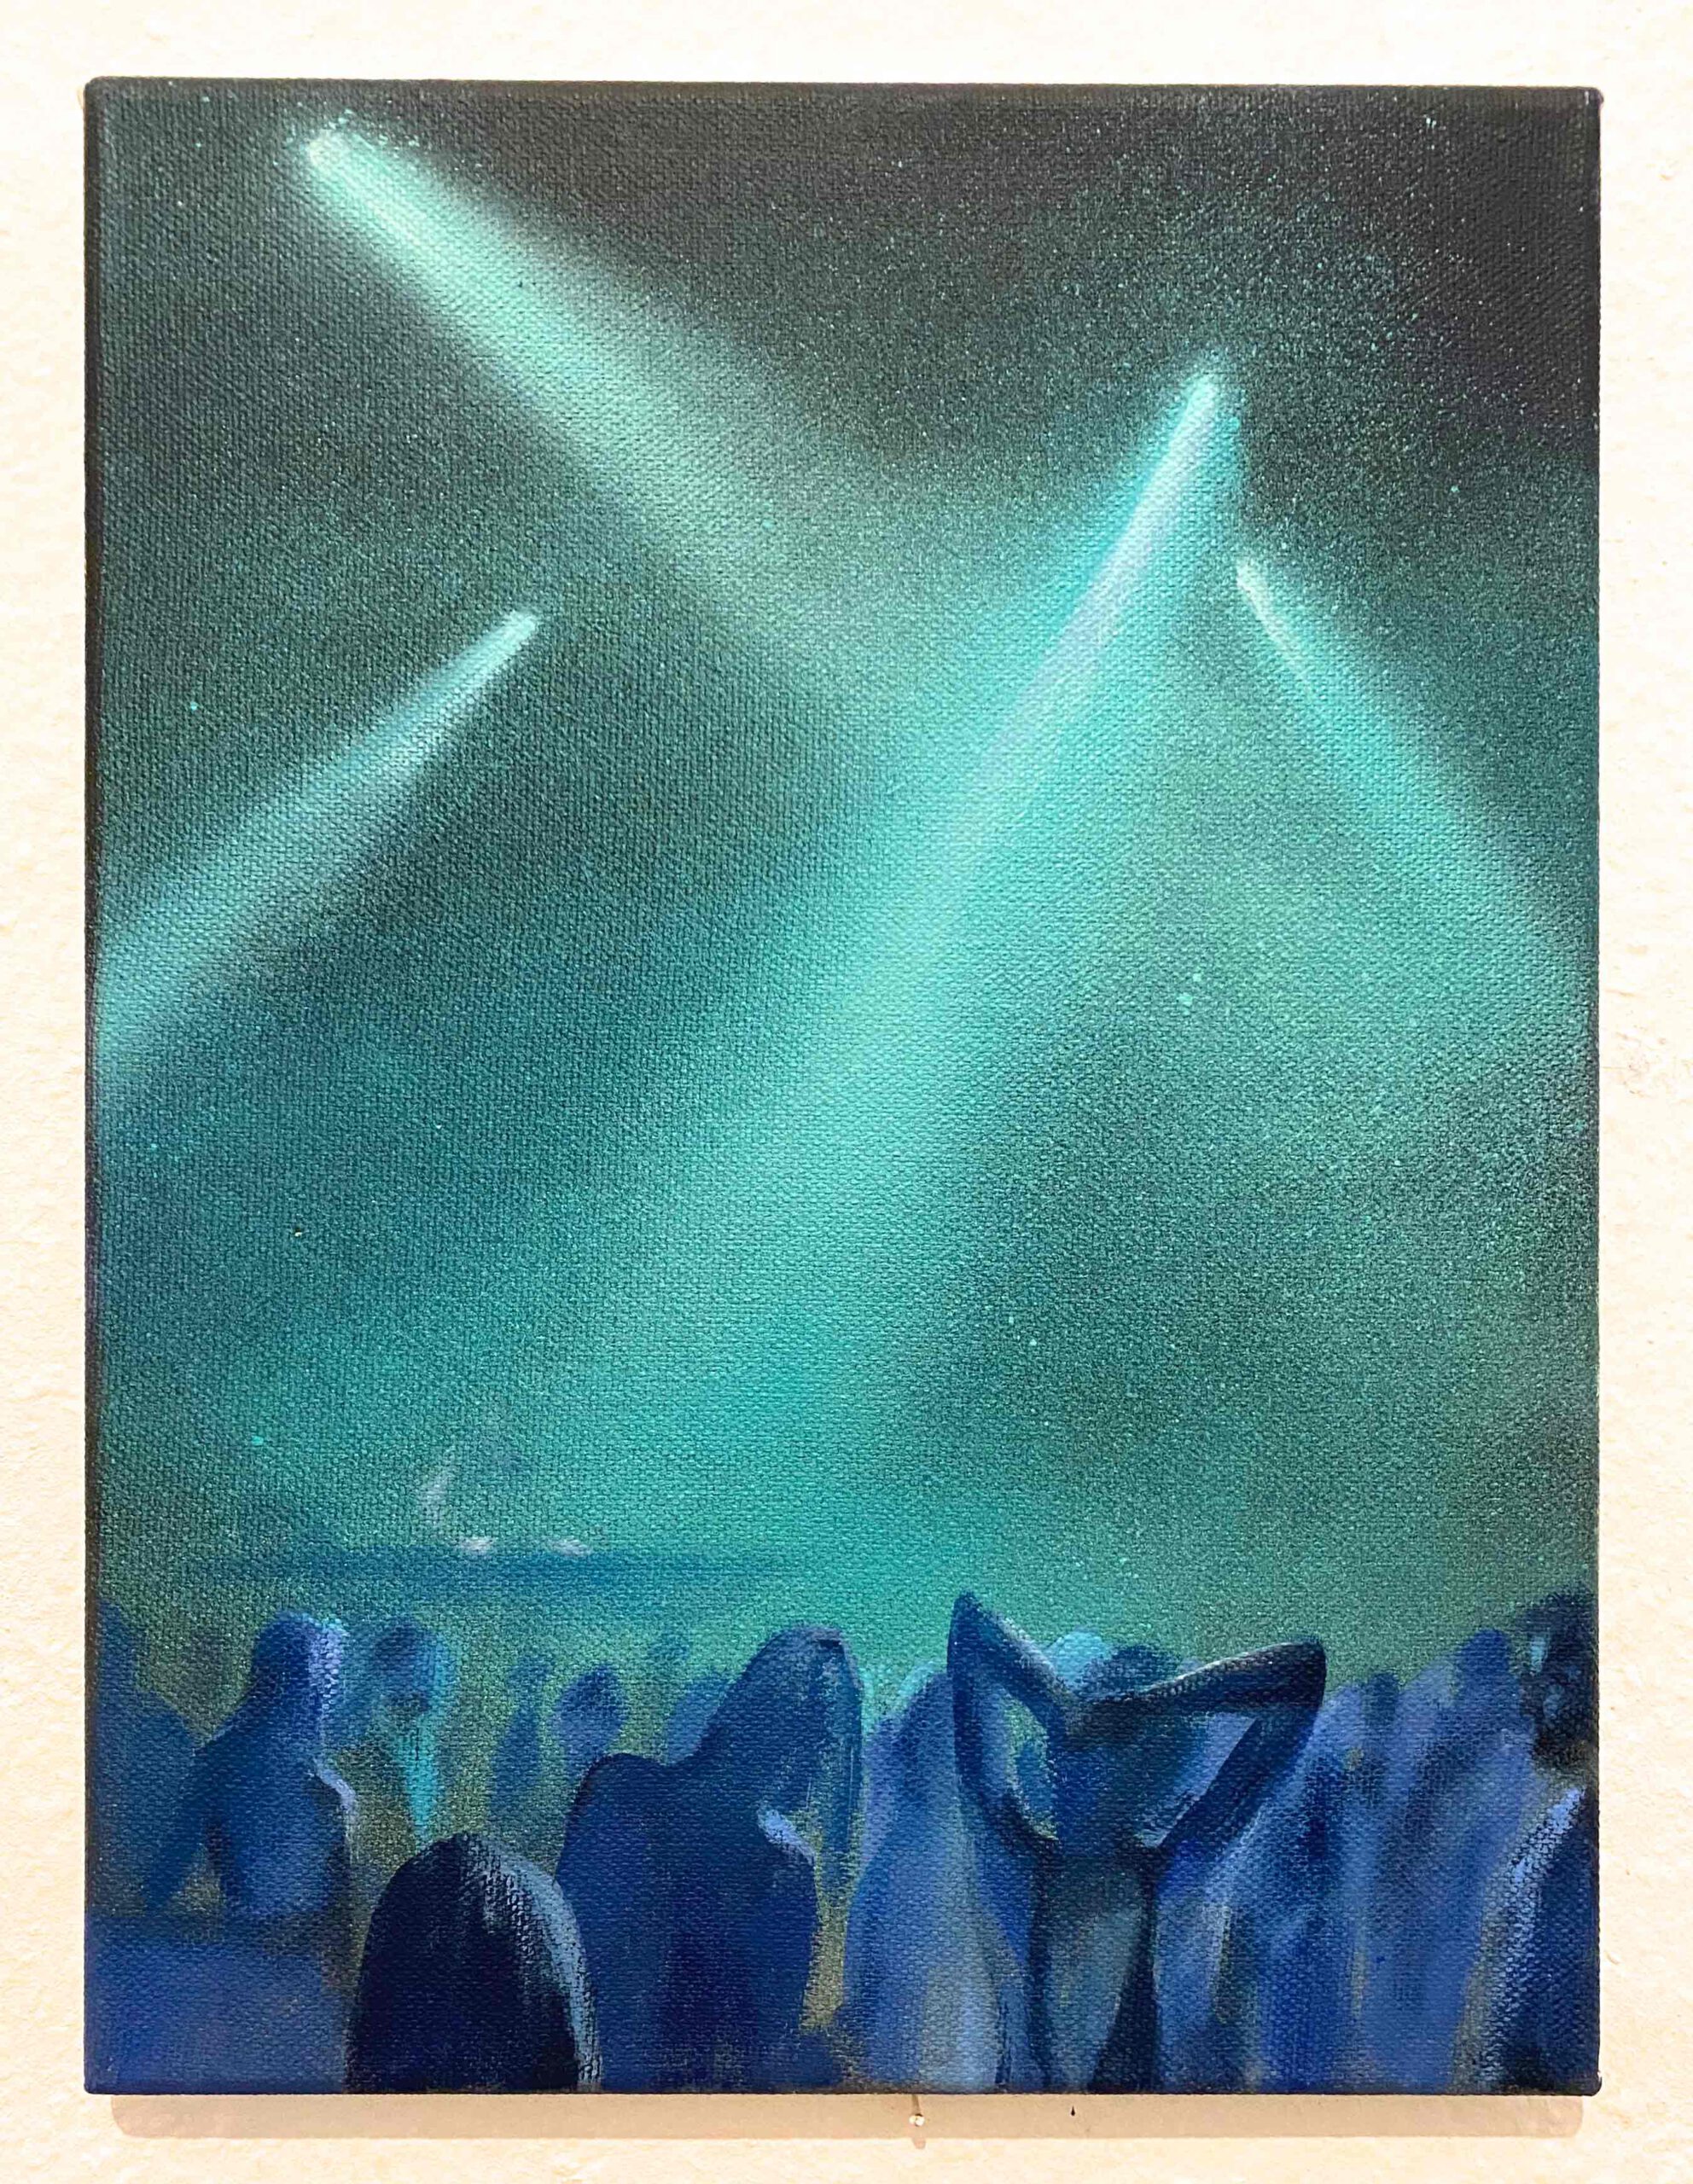 "Neonlight IV." Öl und Acryl auf Leinwand, 40 x 30 cm, Felix Rieger 2018